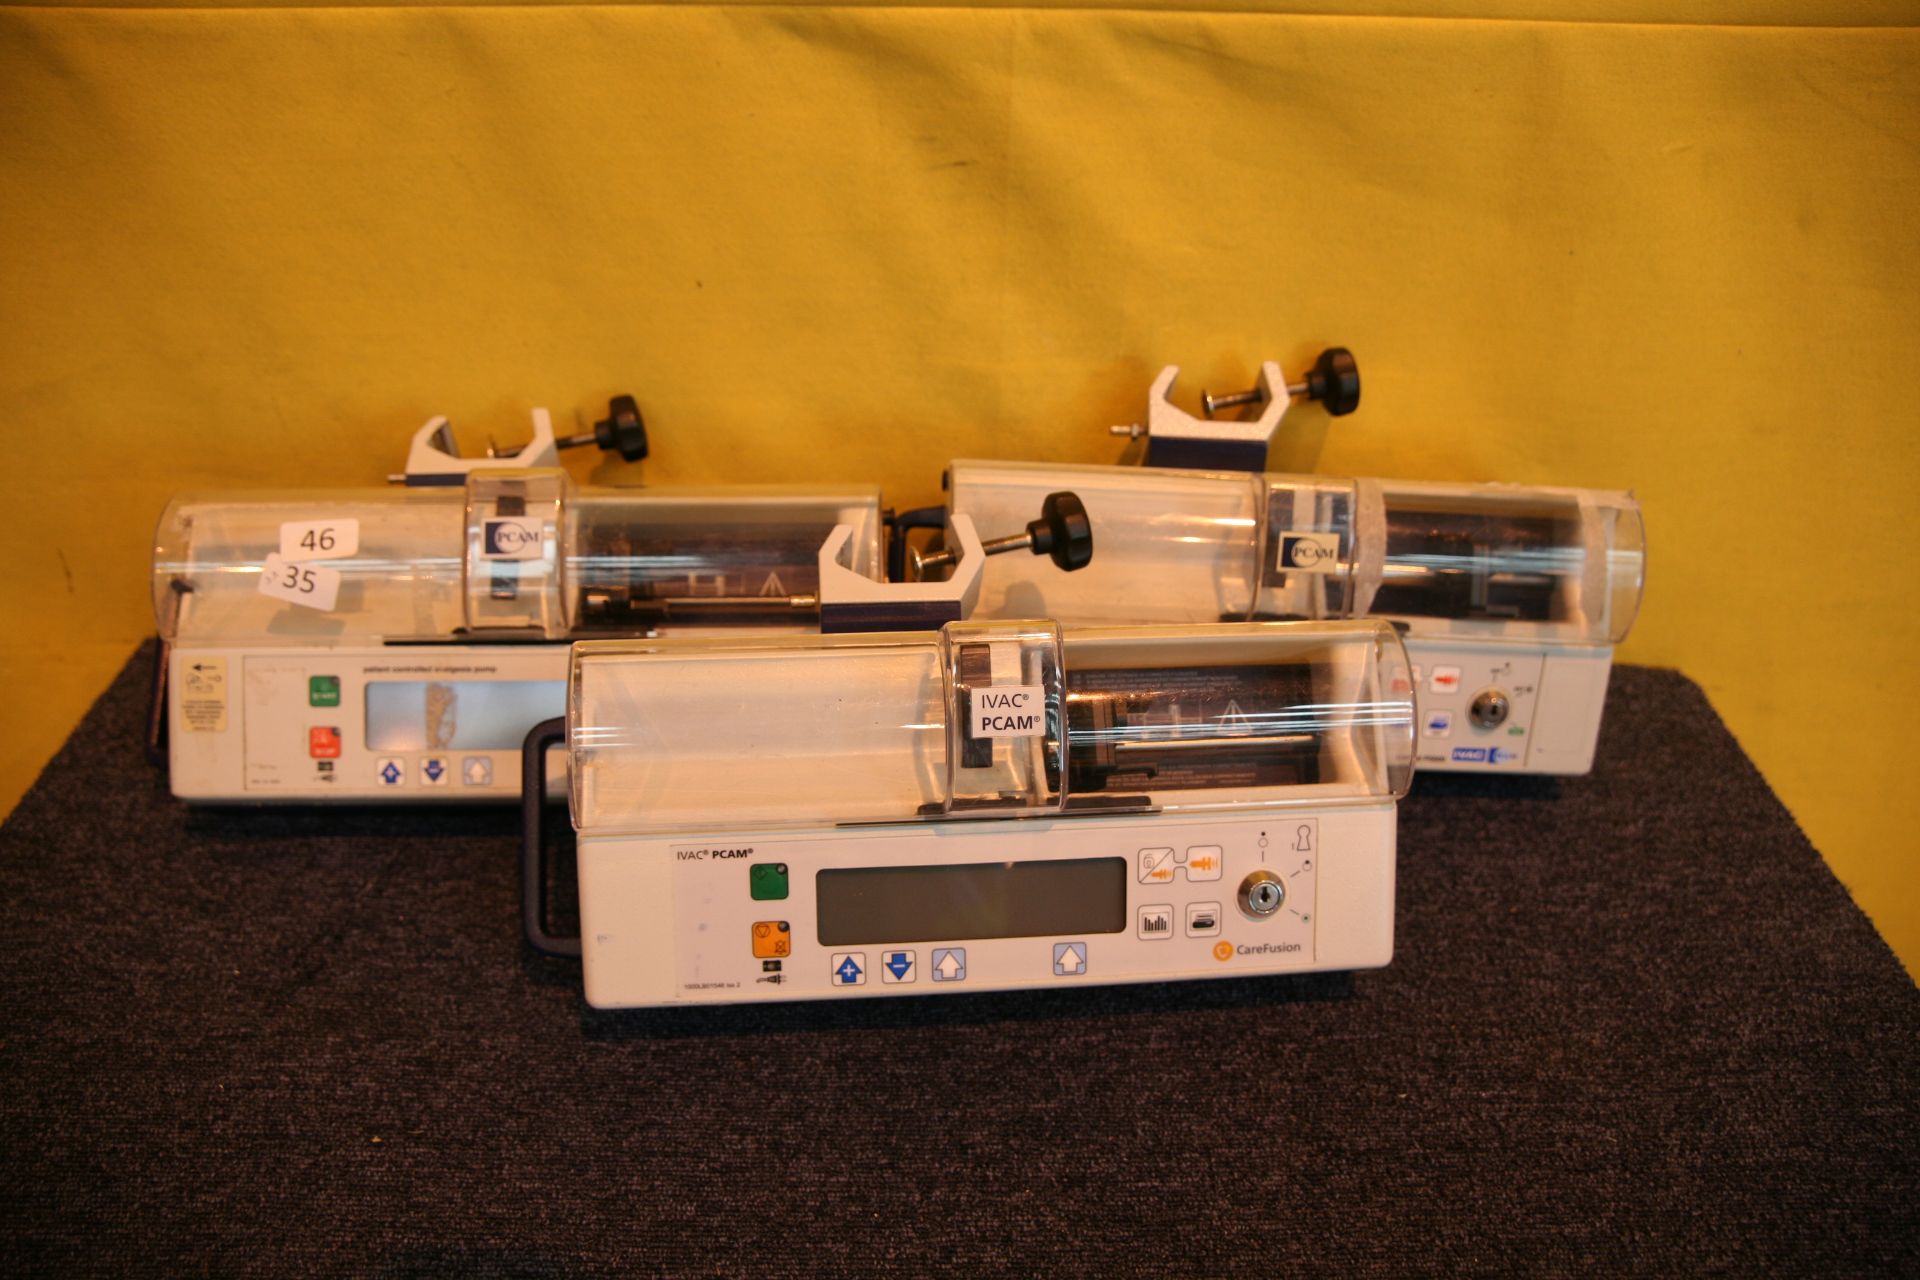 3x IVAC PCAM P5000 Syringe Pumps